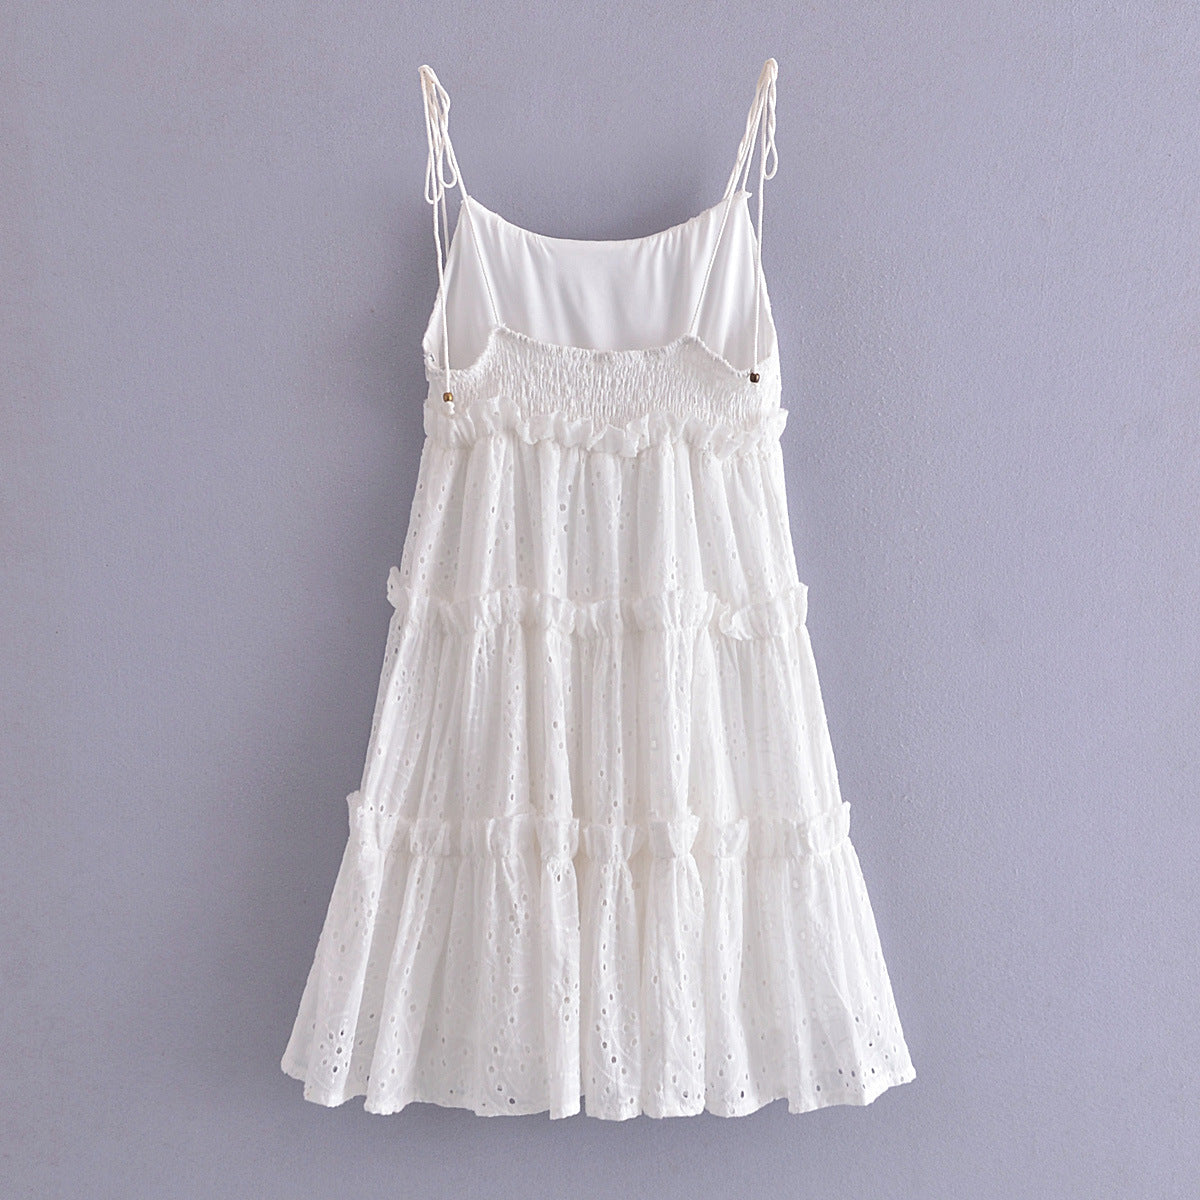 White Eyelet Dress Layered Ruffle Summer Dress Angelwarriorfitness.com